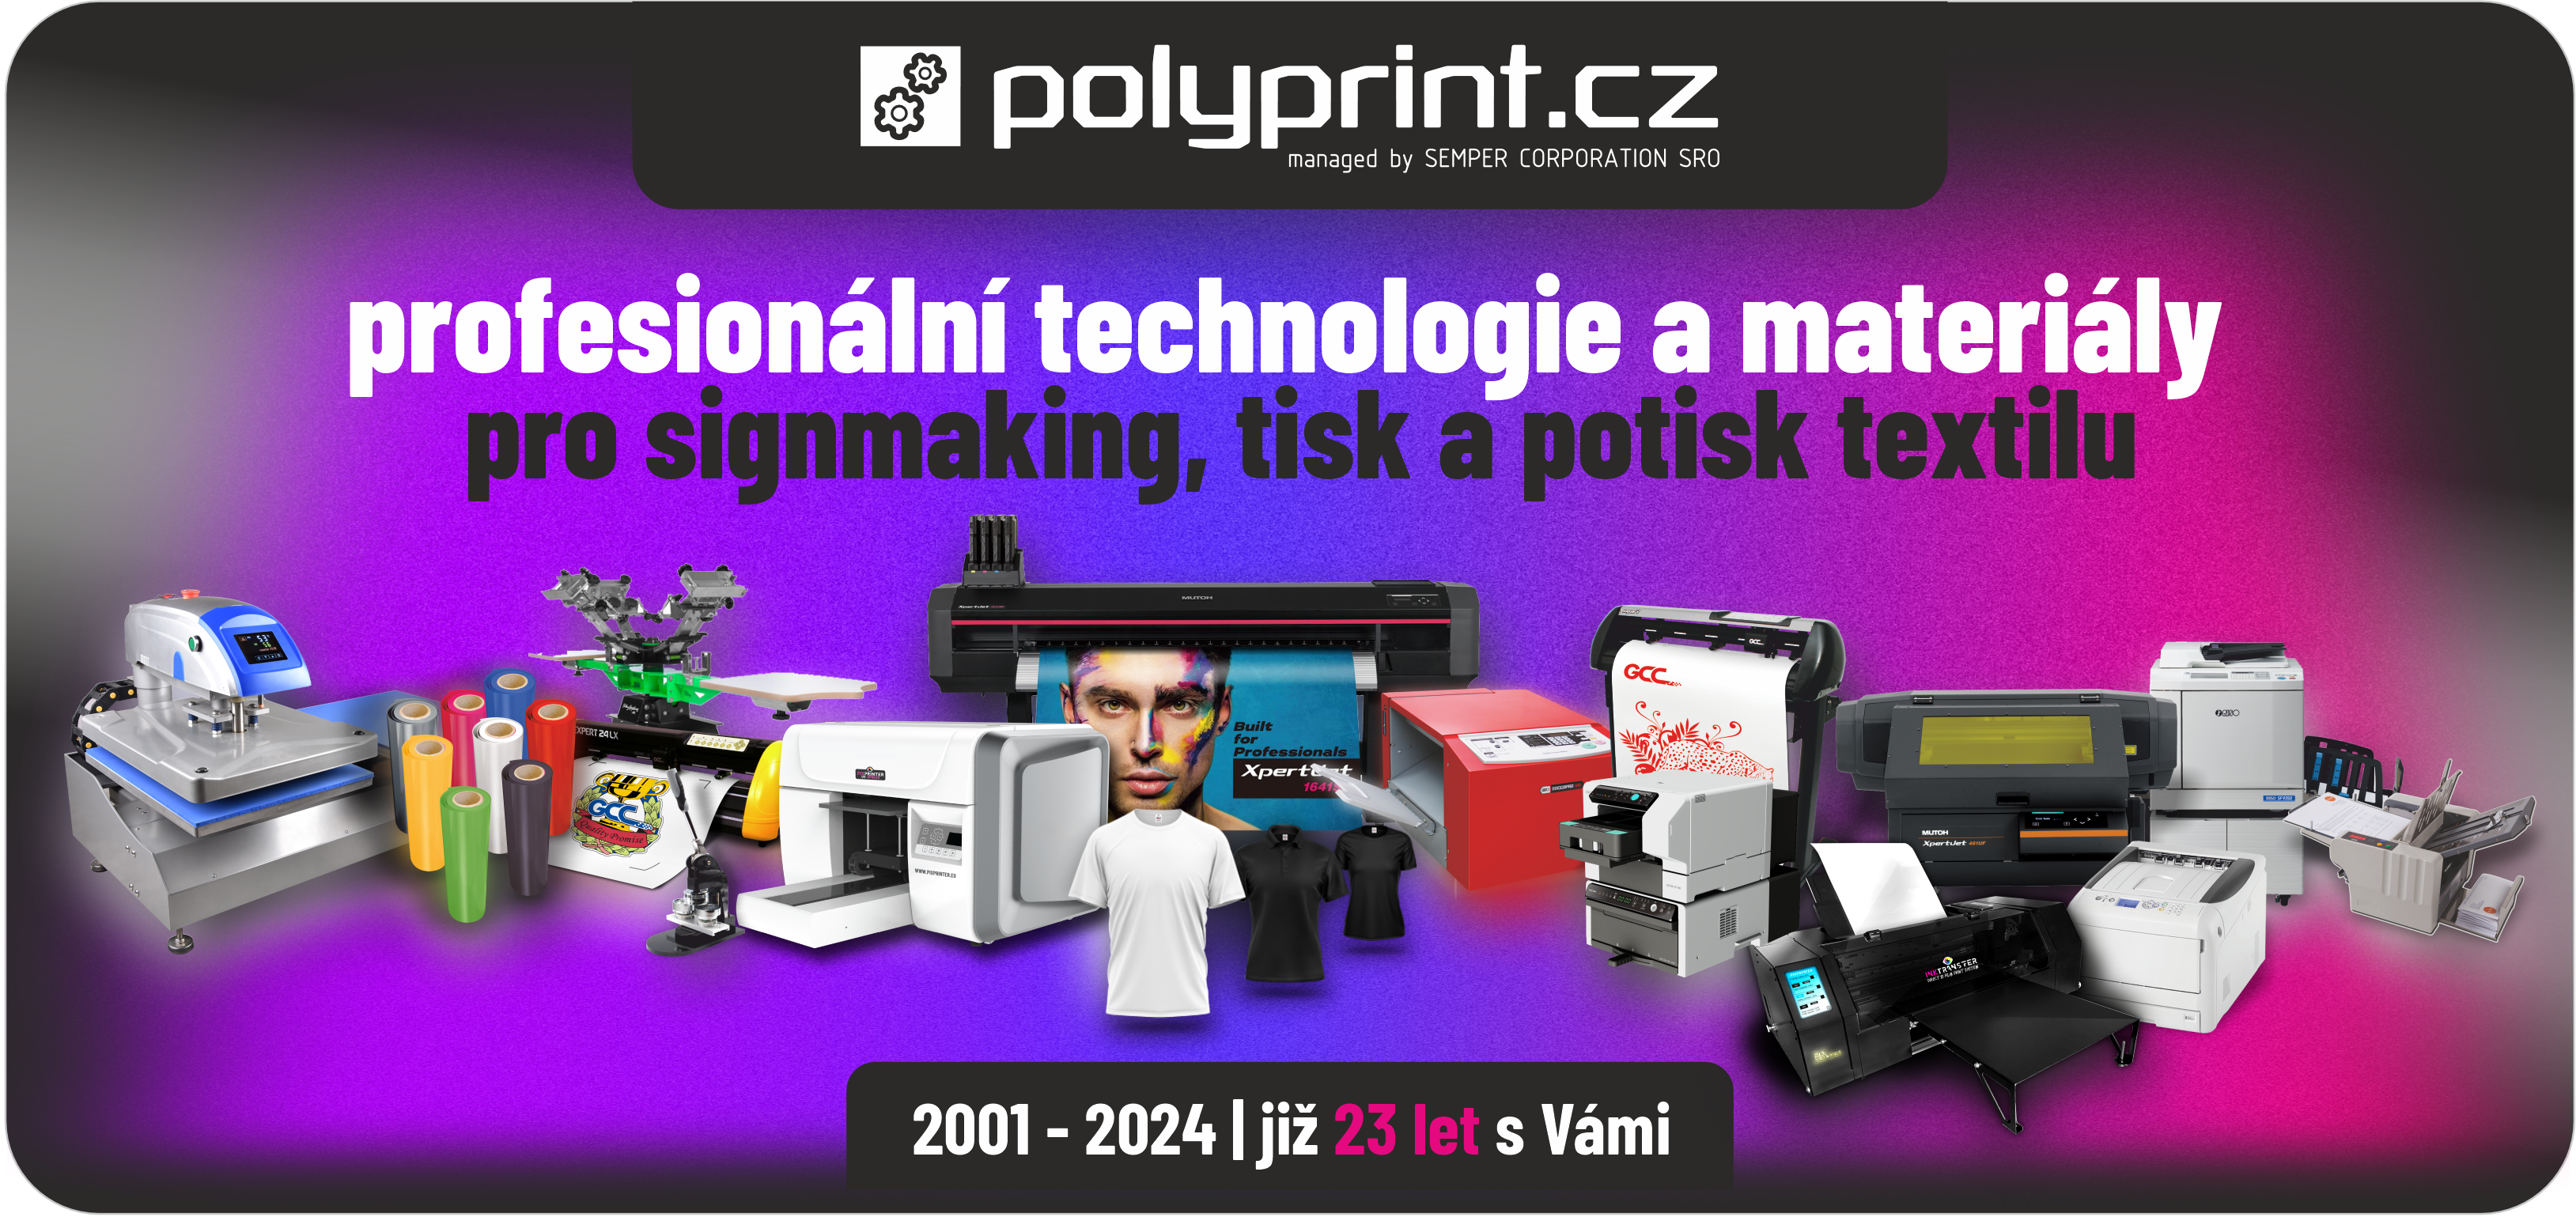 www.polyprint.cz | SEMPER CORPORATION SRO